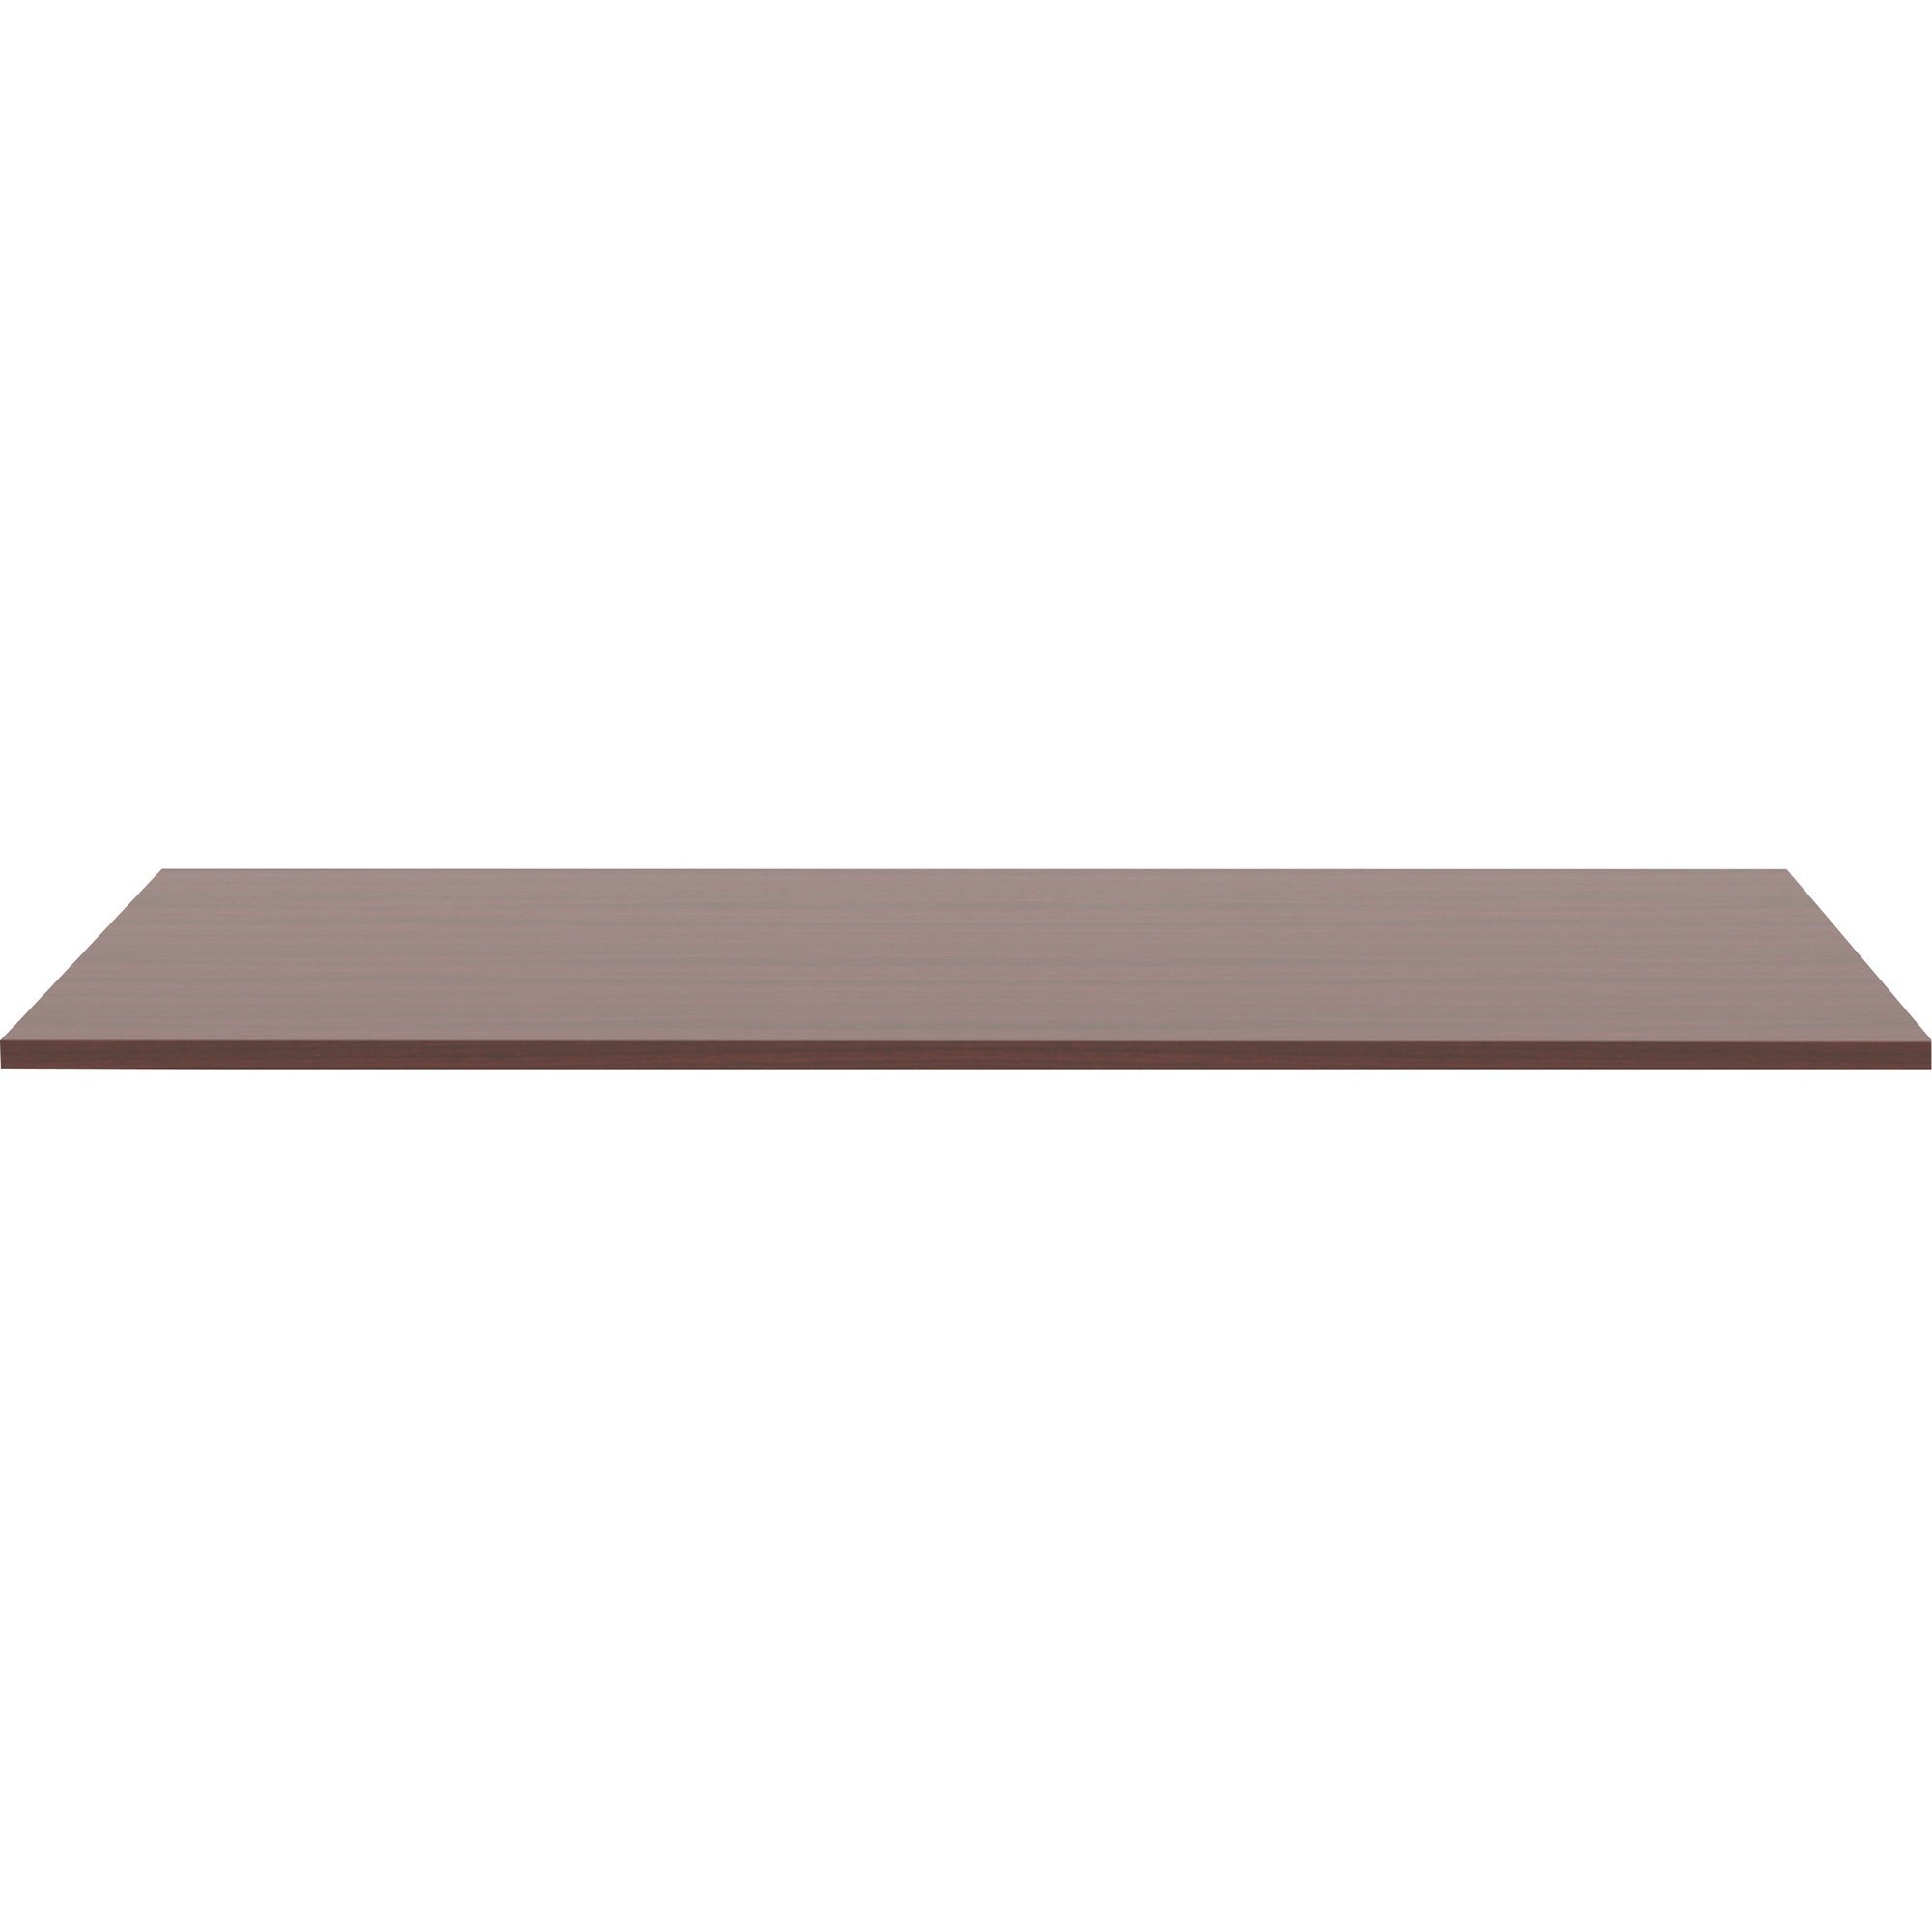 lorell-revelance-conference-rectangular-tabletop-599-x-473-x-1-x-1-material-laminate-finish-mahogany_llr16255 - 2